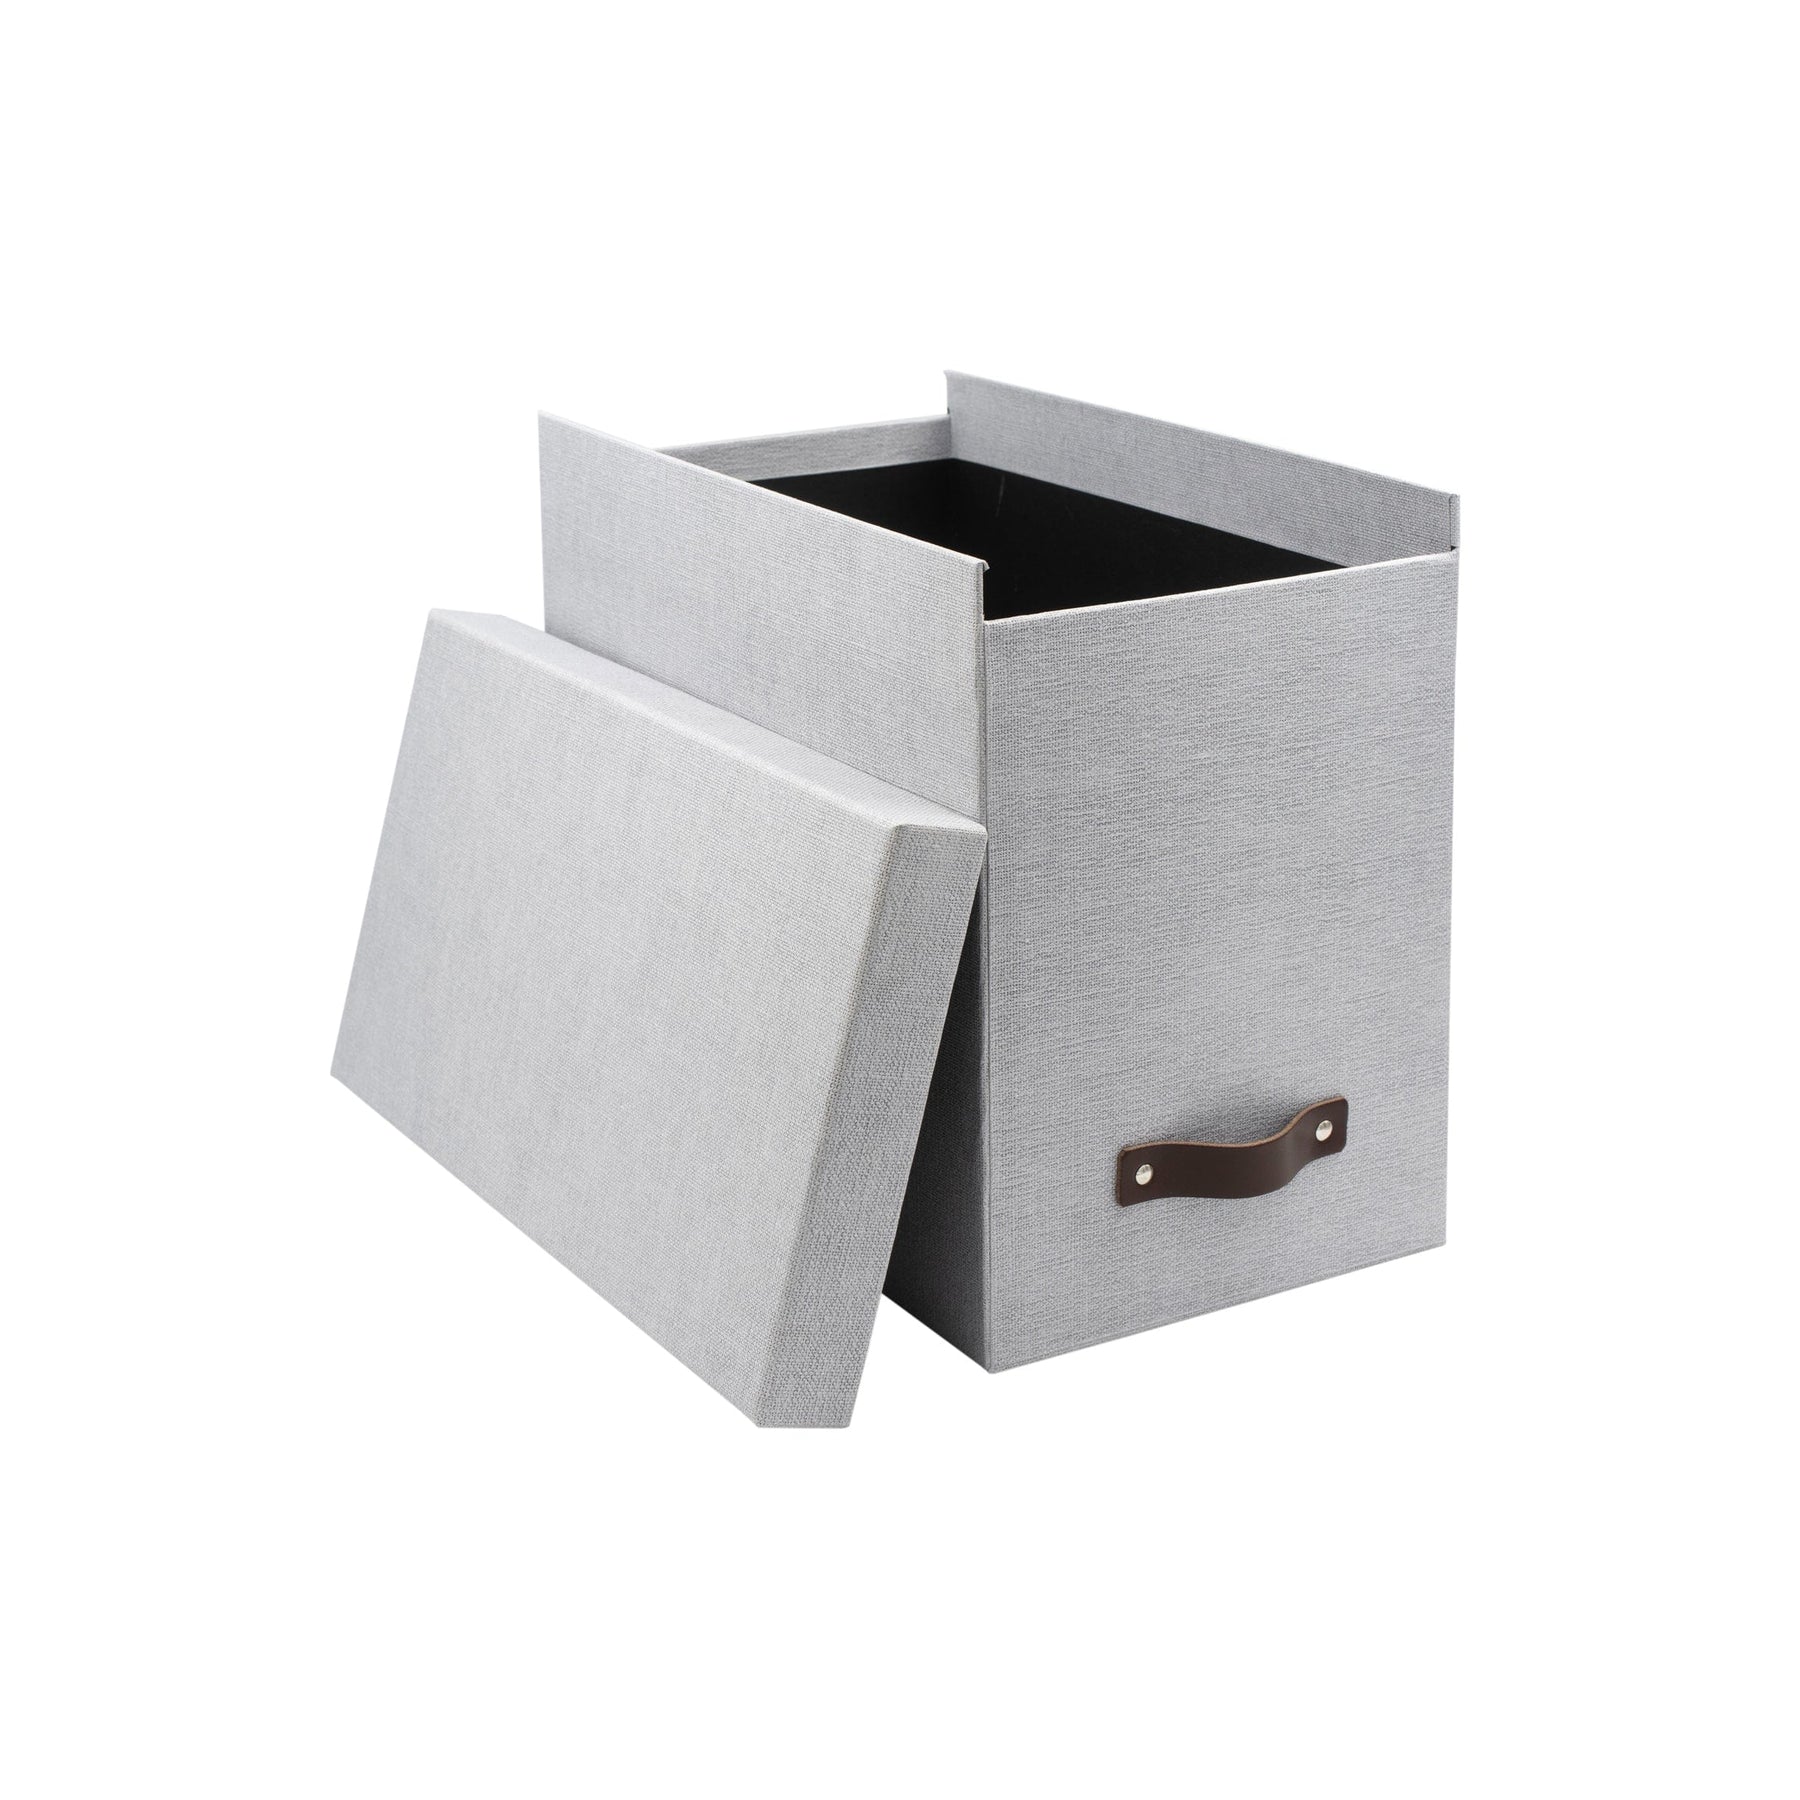 Filing & document storage - Bigso Box of Sweden